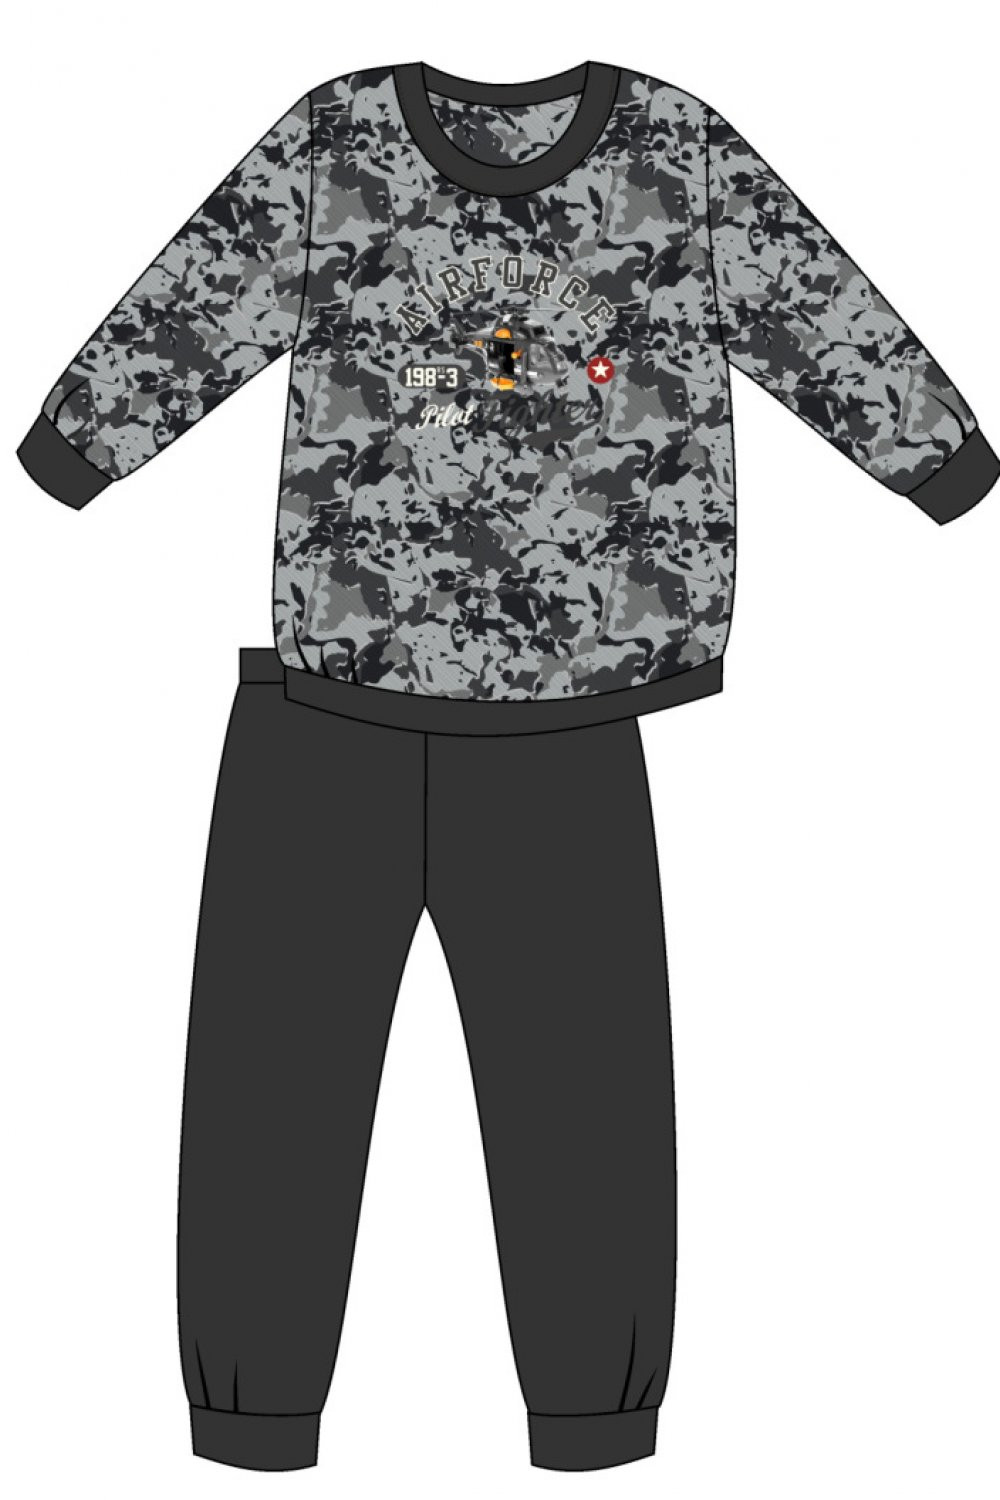 Chlapecké pyžamo 454/118 Air force - CORNETTE 134/140